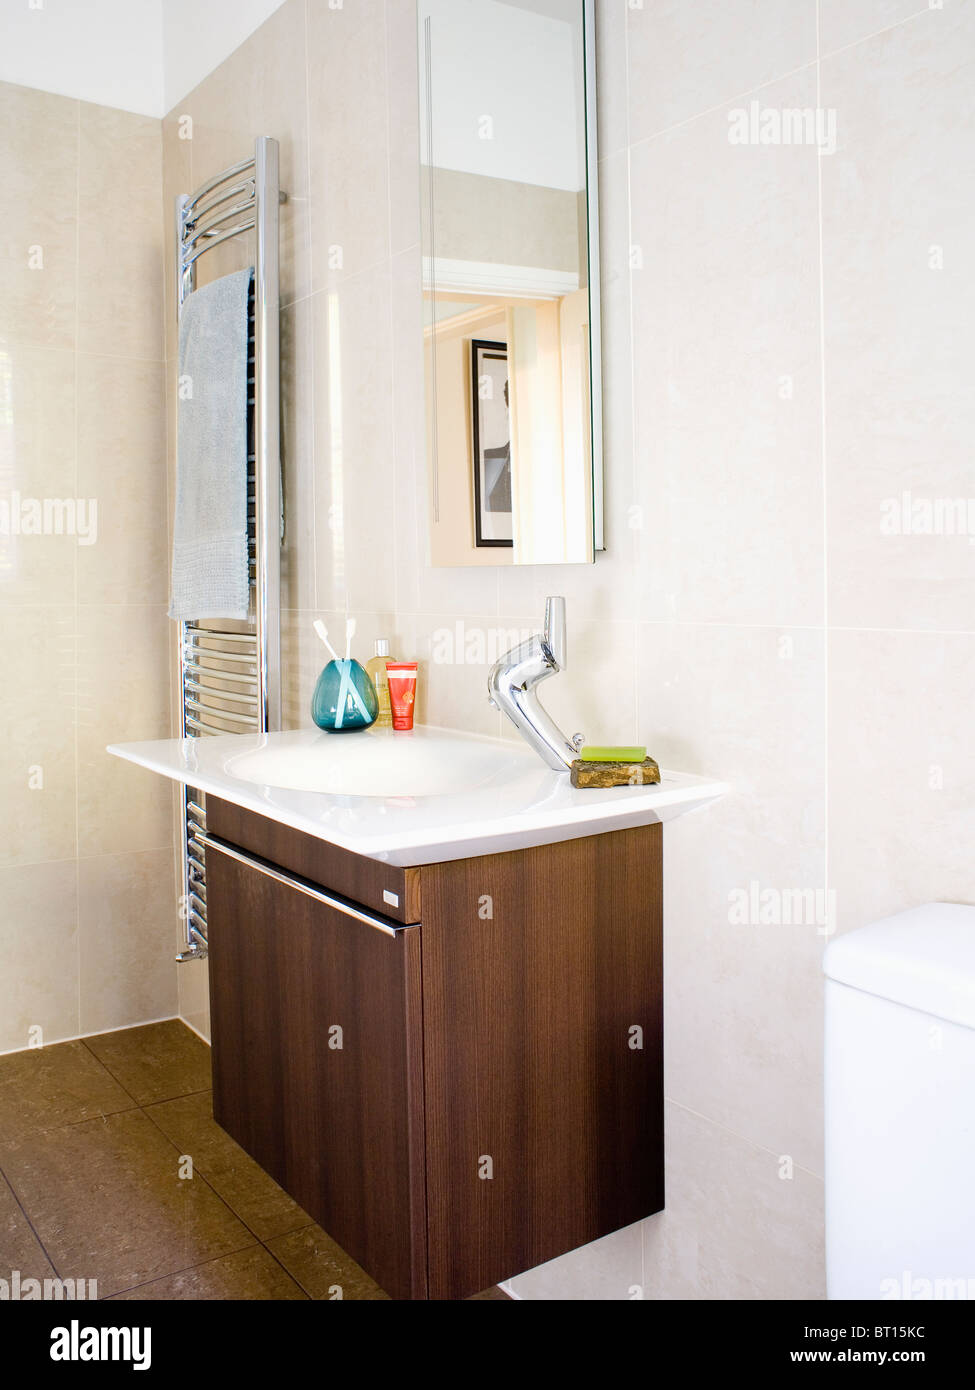 Mirror Above Basin In Dark Wood Vanity Unit In Modern White Bathroom Stock Photo Alamy